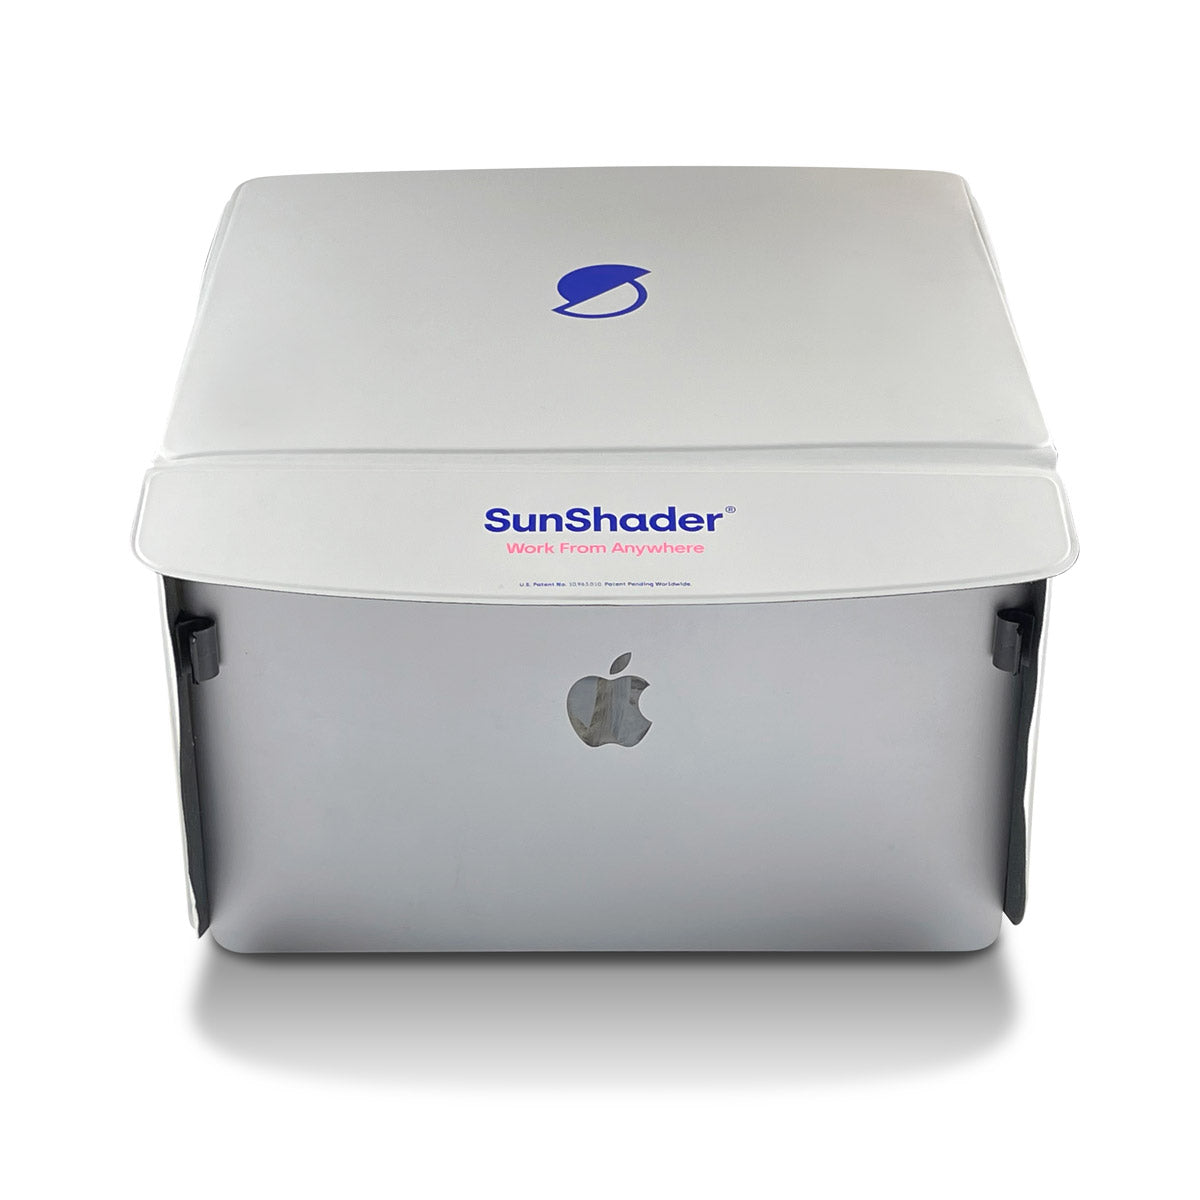 SunShader 2.5 (Opened Box) Laptop Shade